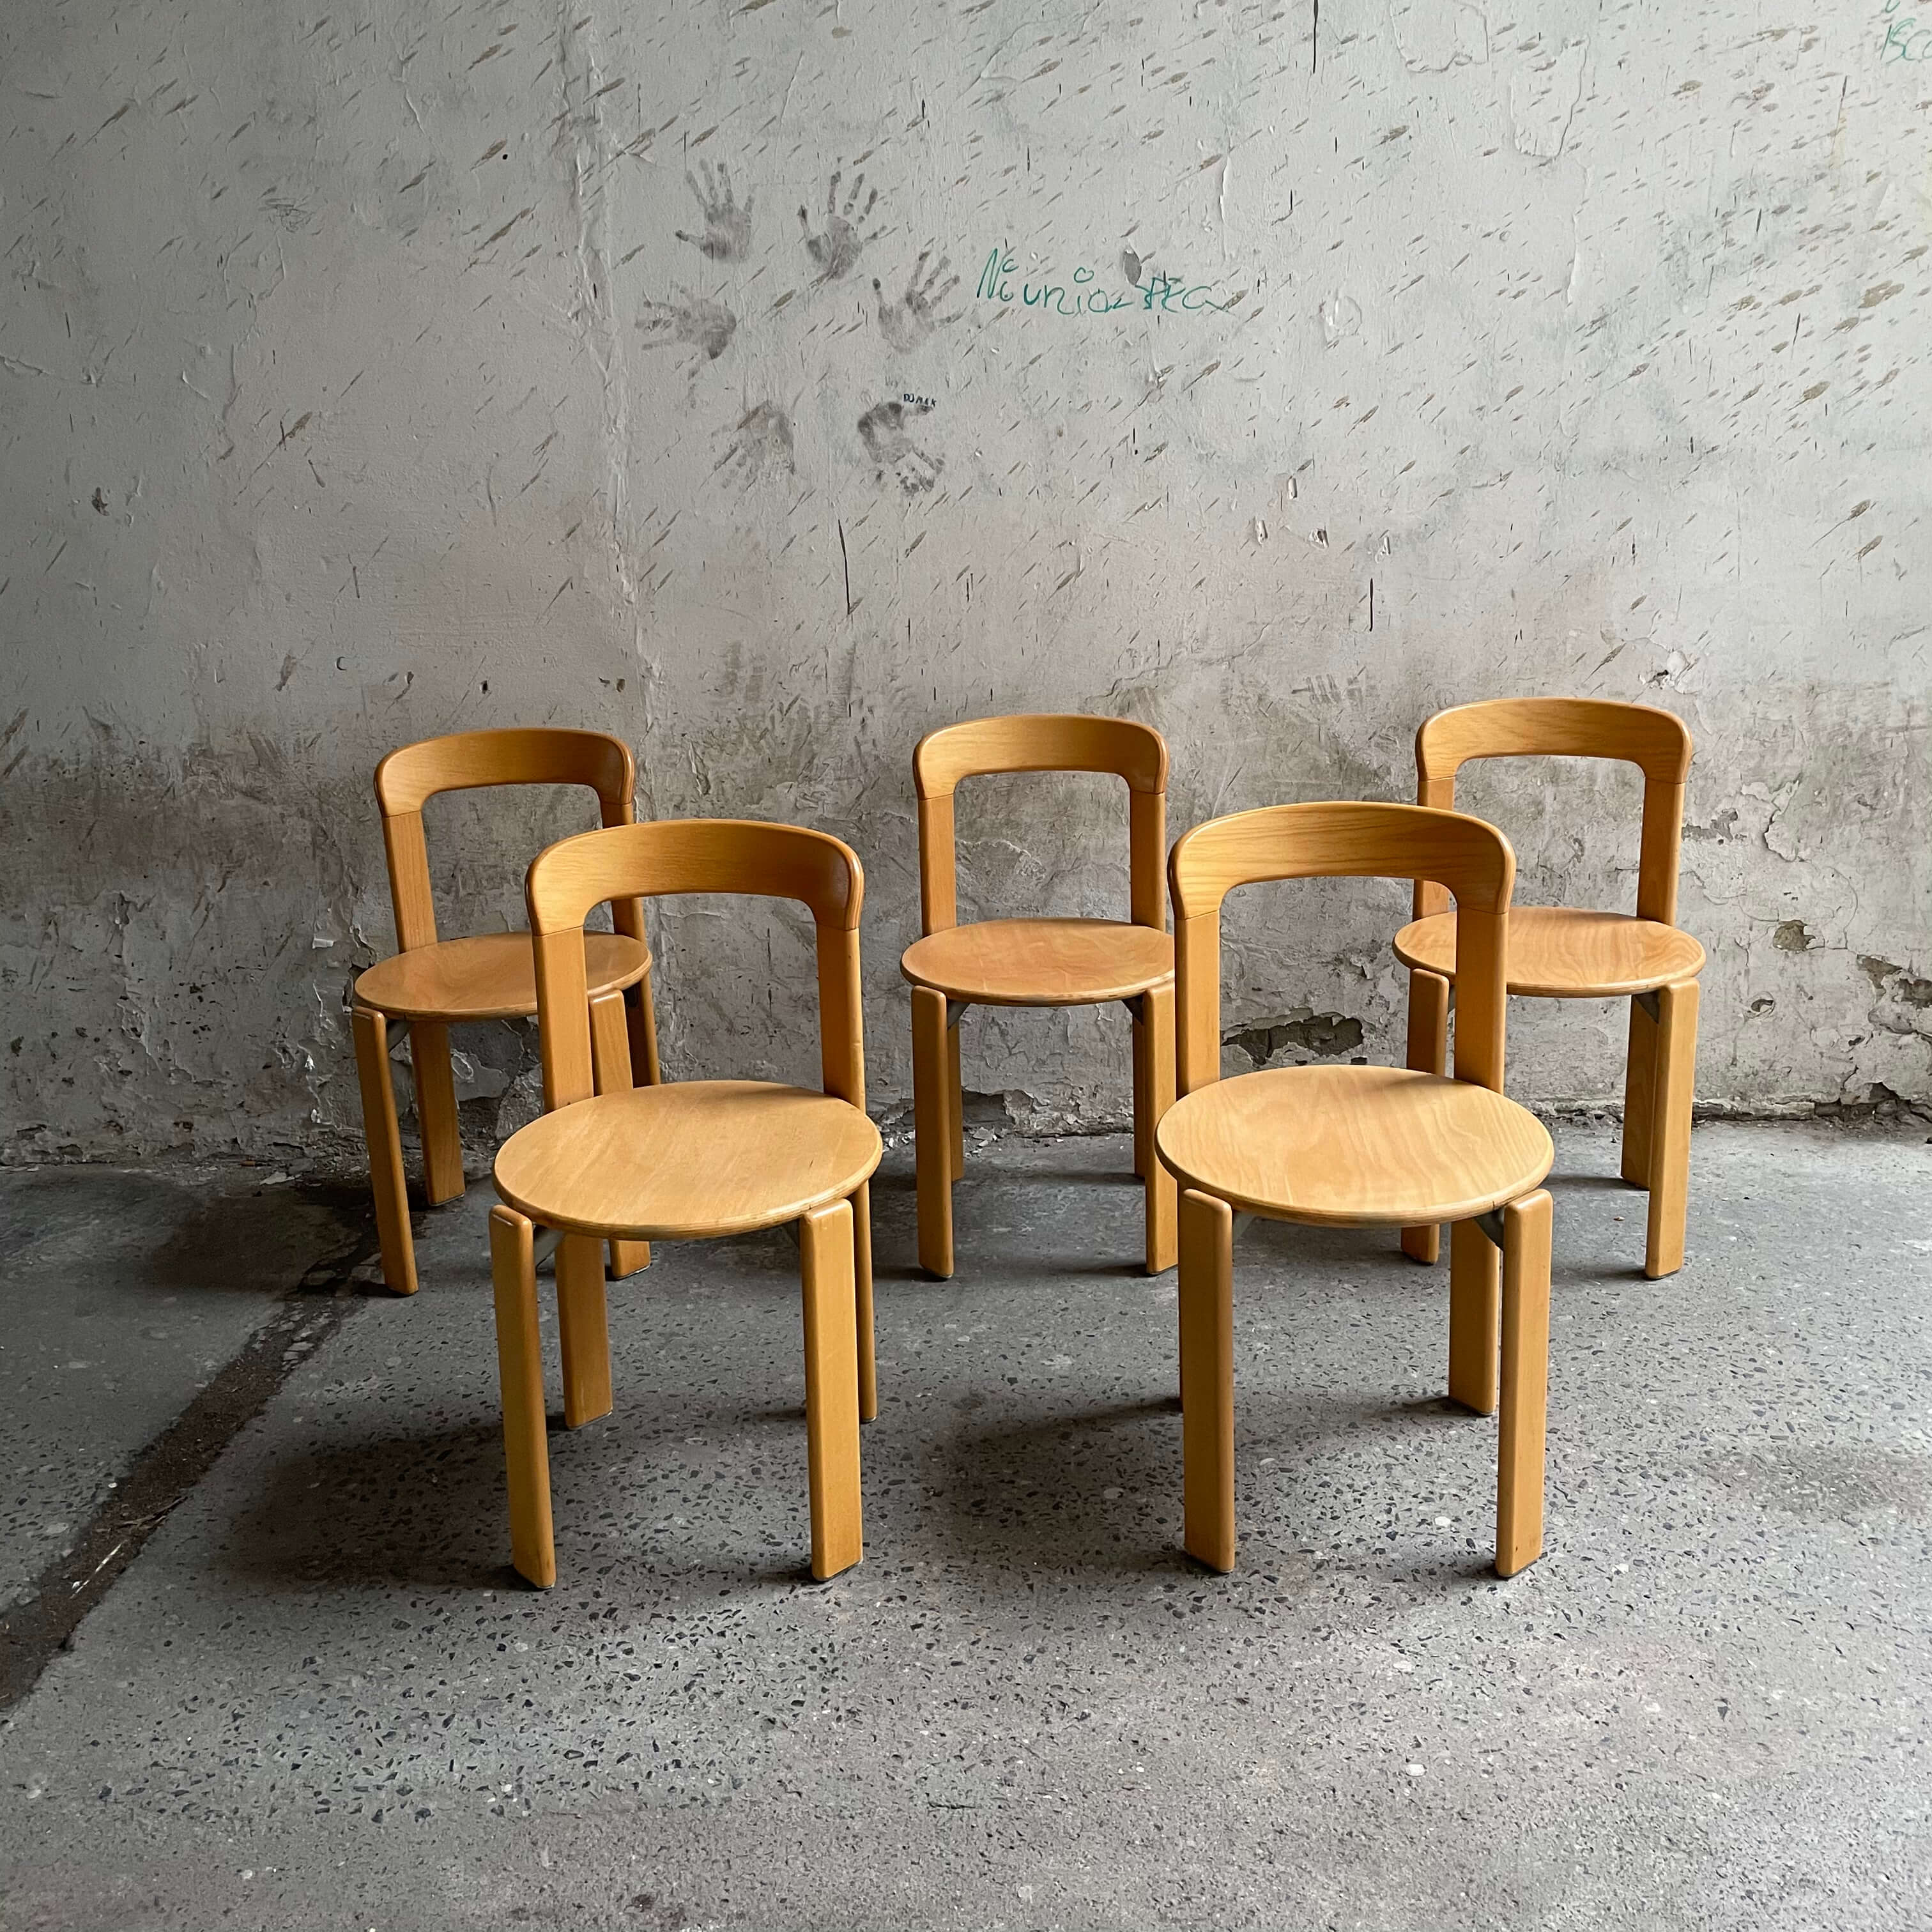 bruno rey kusch co antyki warszawa warsaw vintage chairs